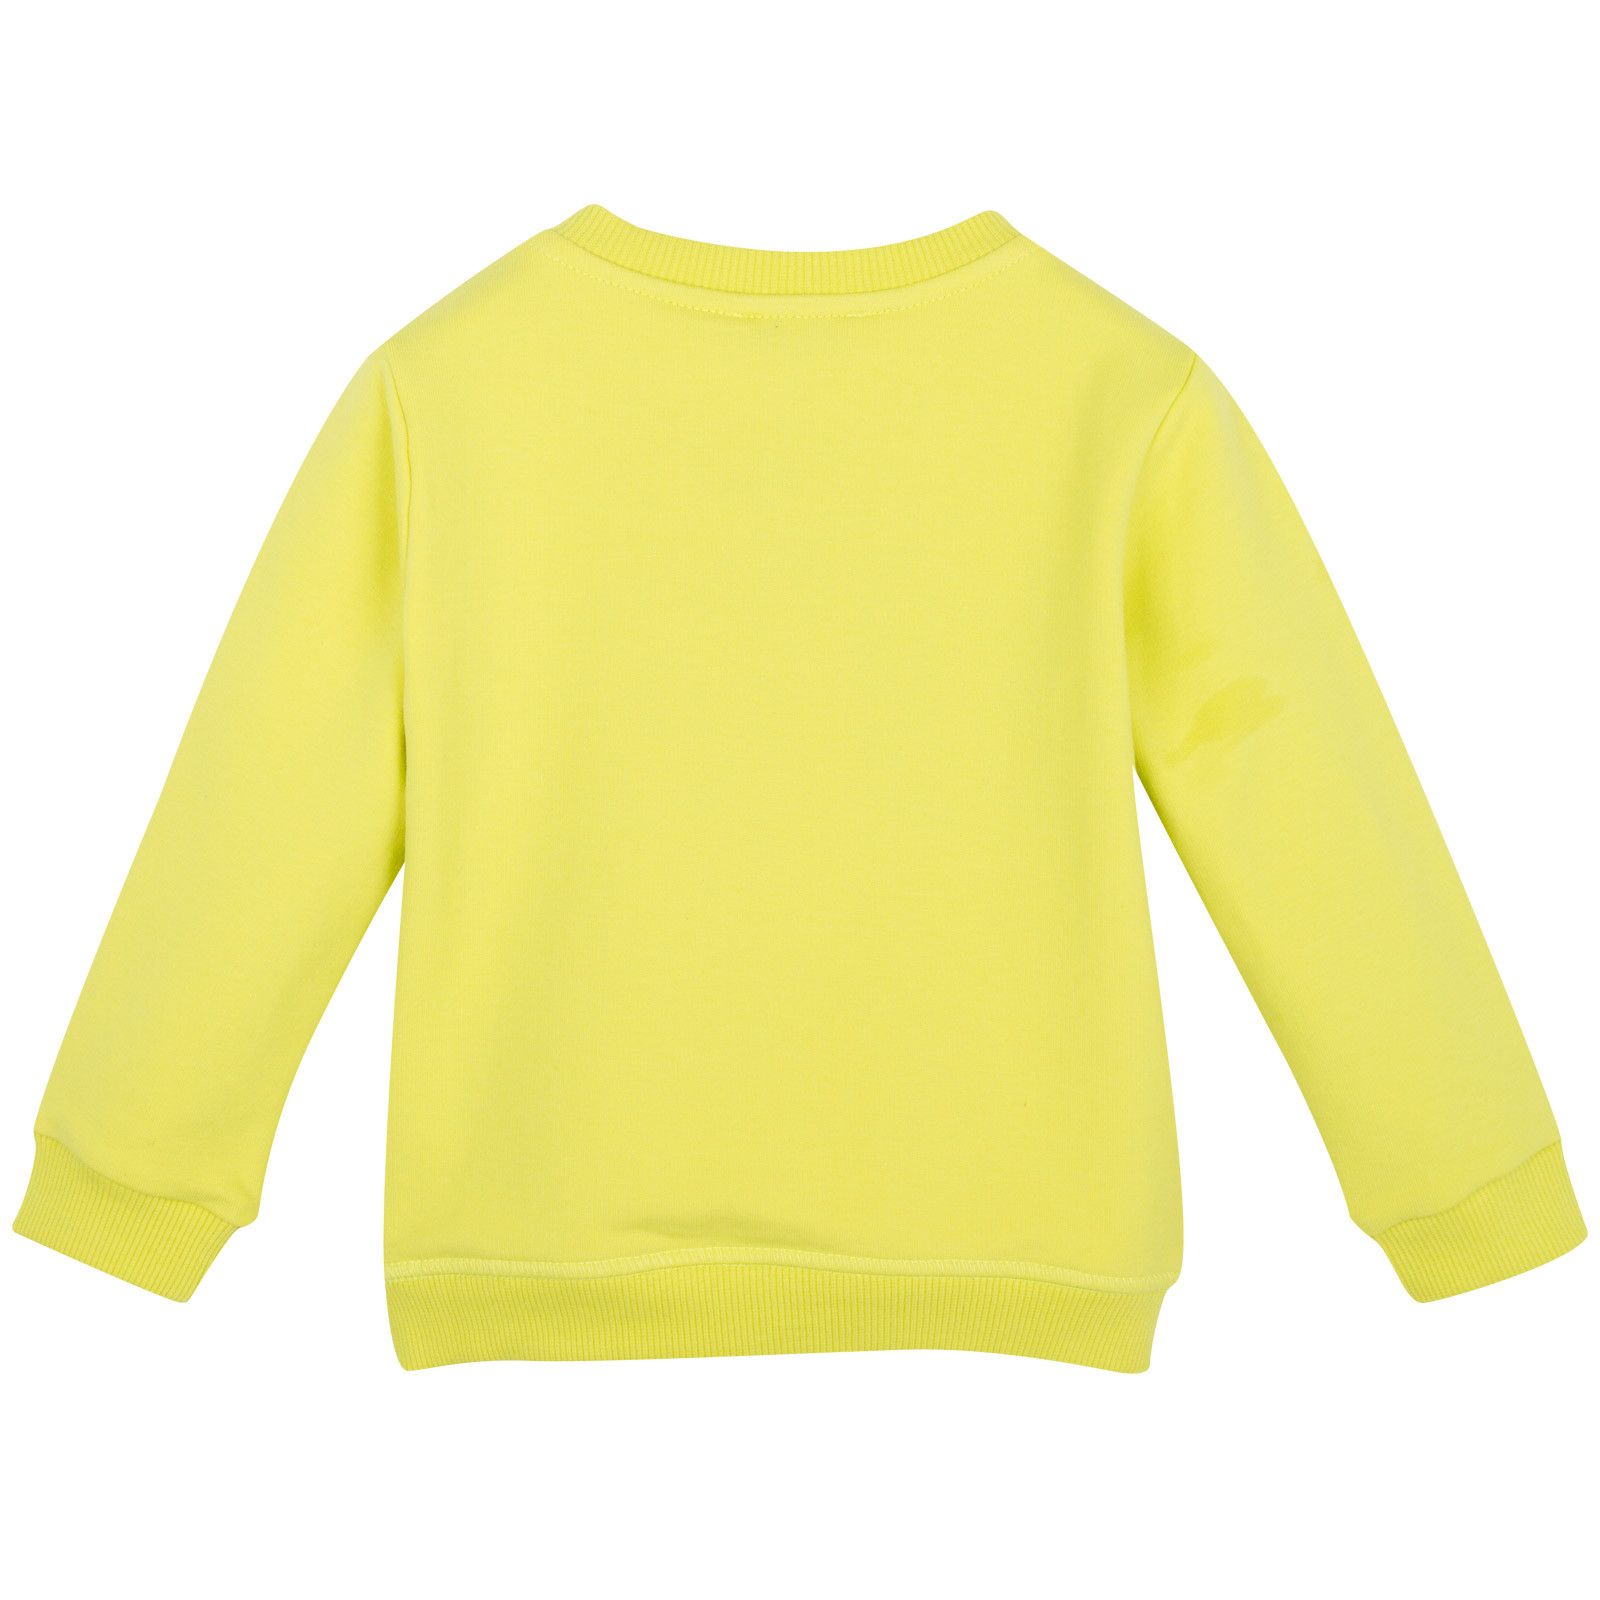 Boys Lime Green Tiger Embroidered Sweatshirt - CÉMAROSE | Children's Fashion Store - 2